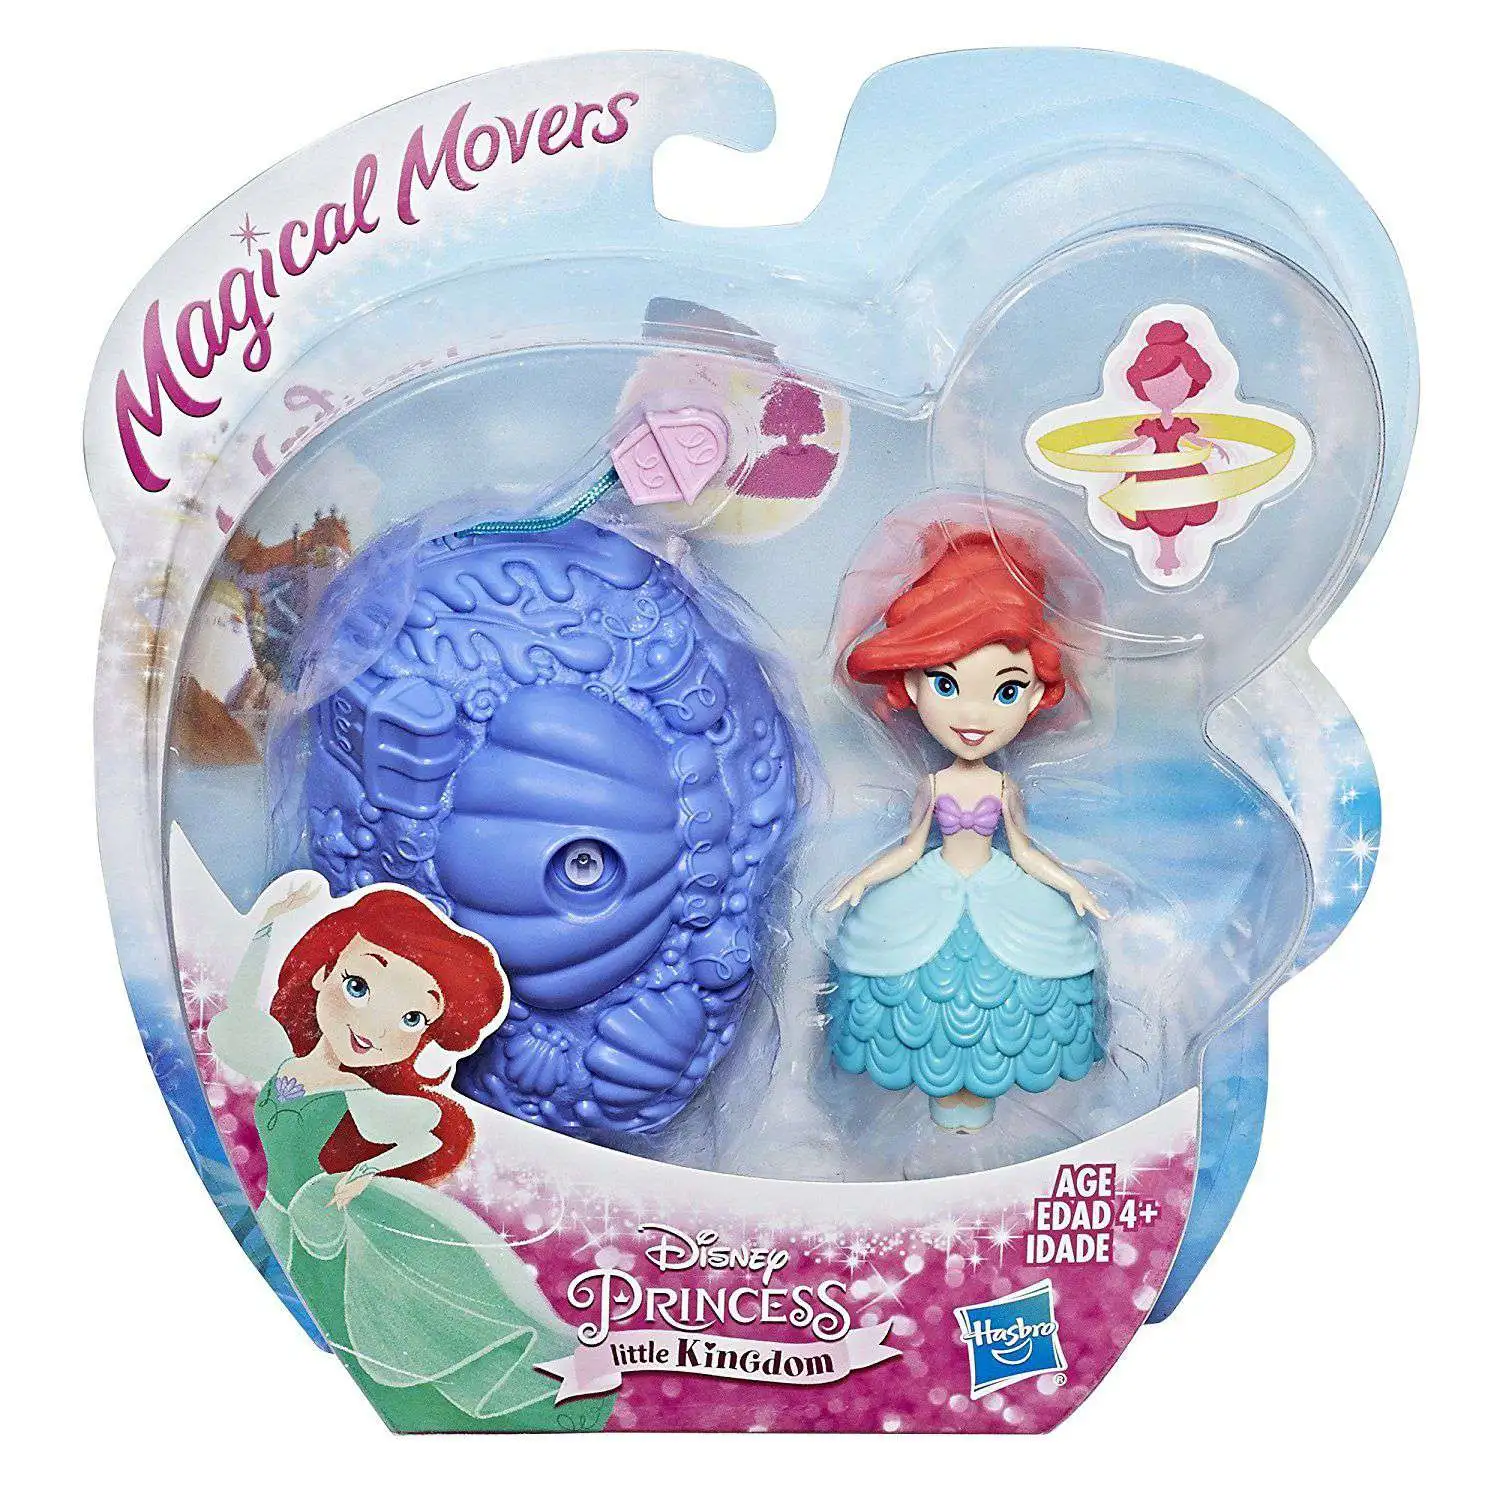 Magical Movers Disney Princess little Kingdom Belle's Dance and Twirl Ballroom 